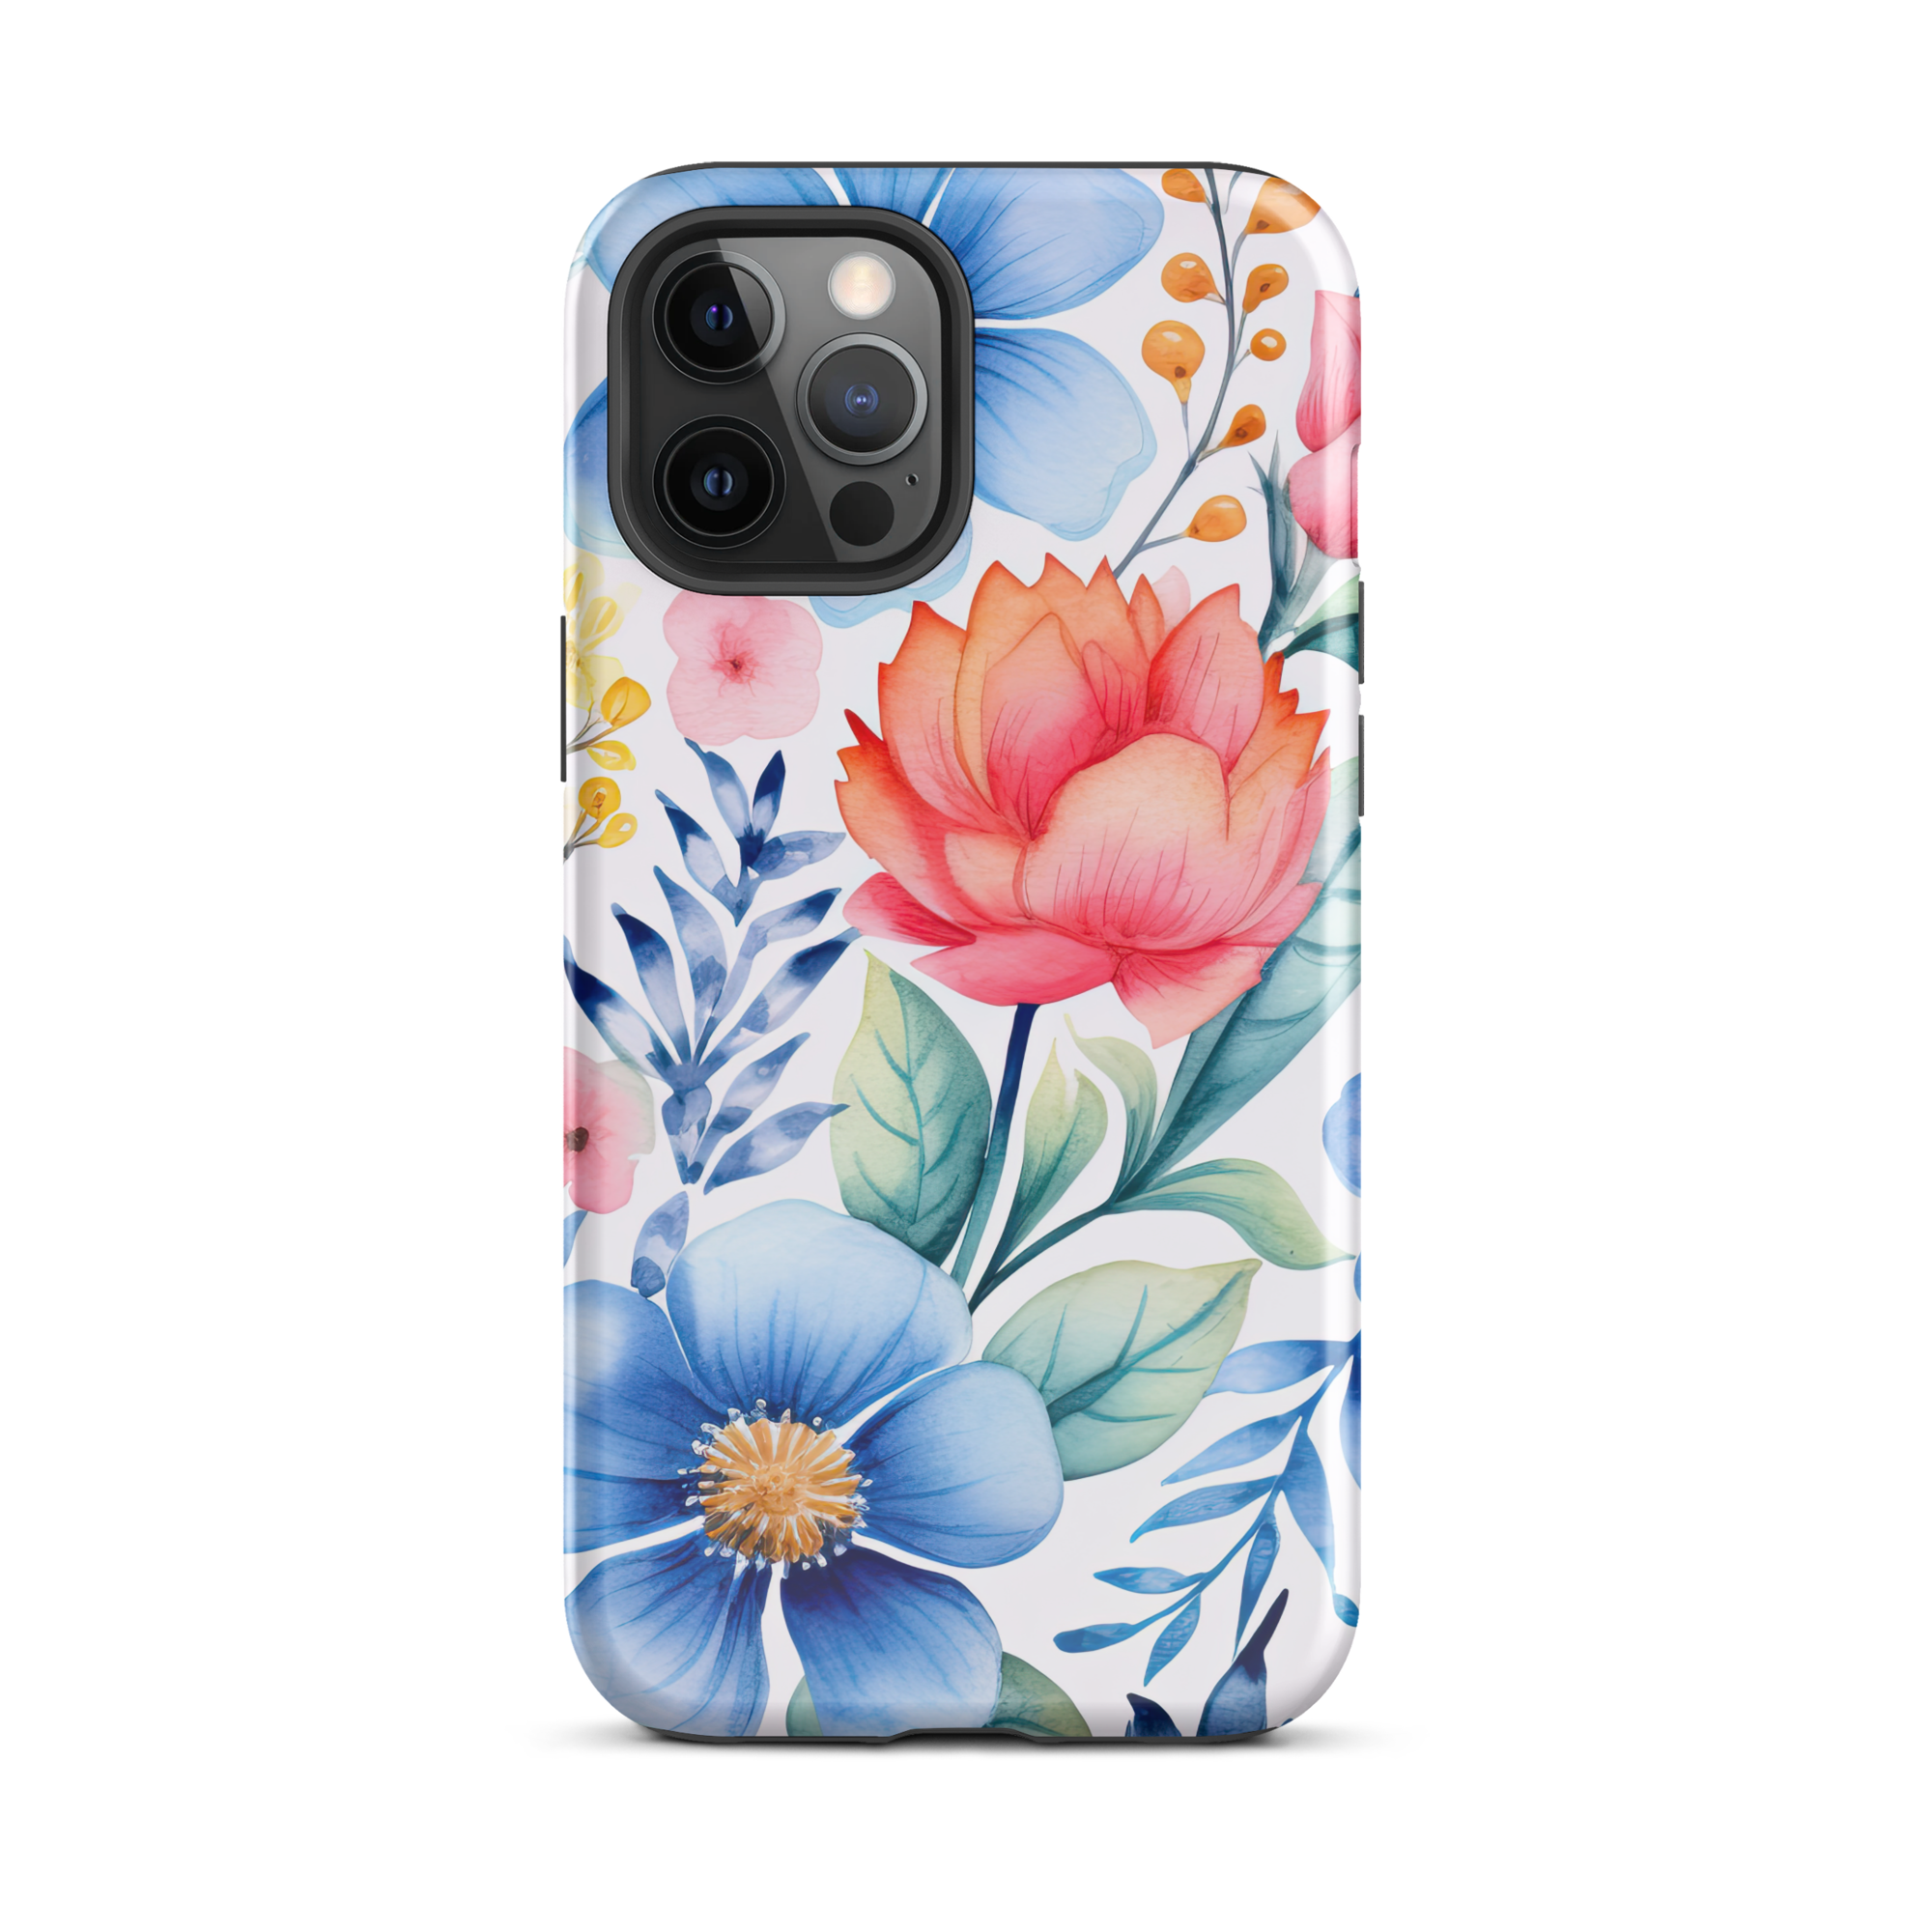 Coral Blossom iPhone 12 Pro Max Case